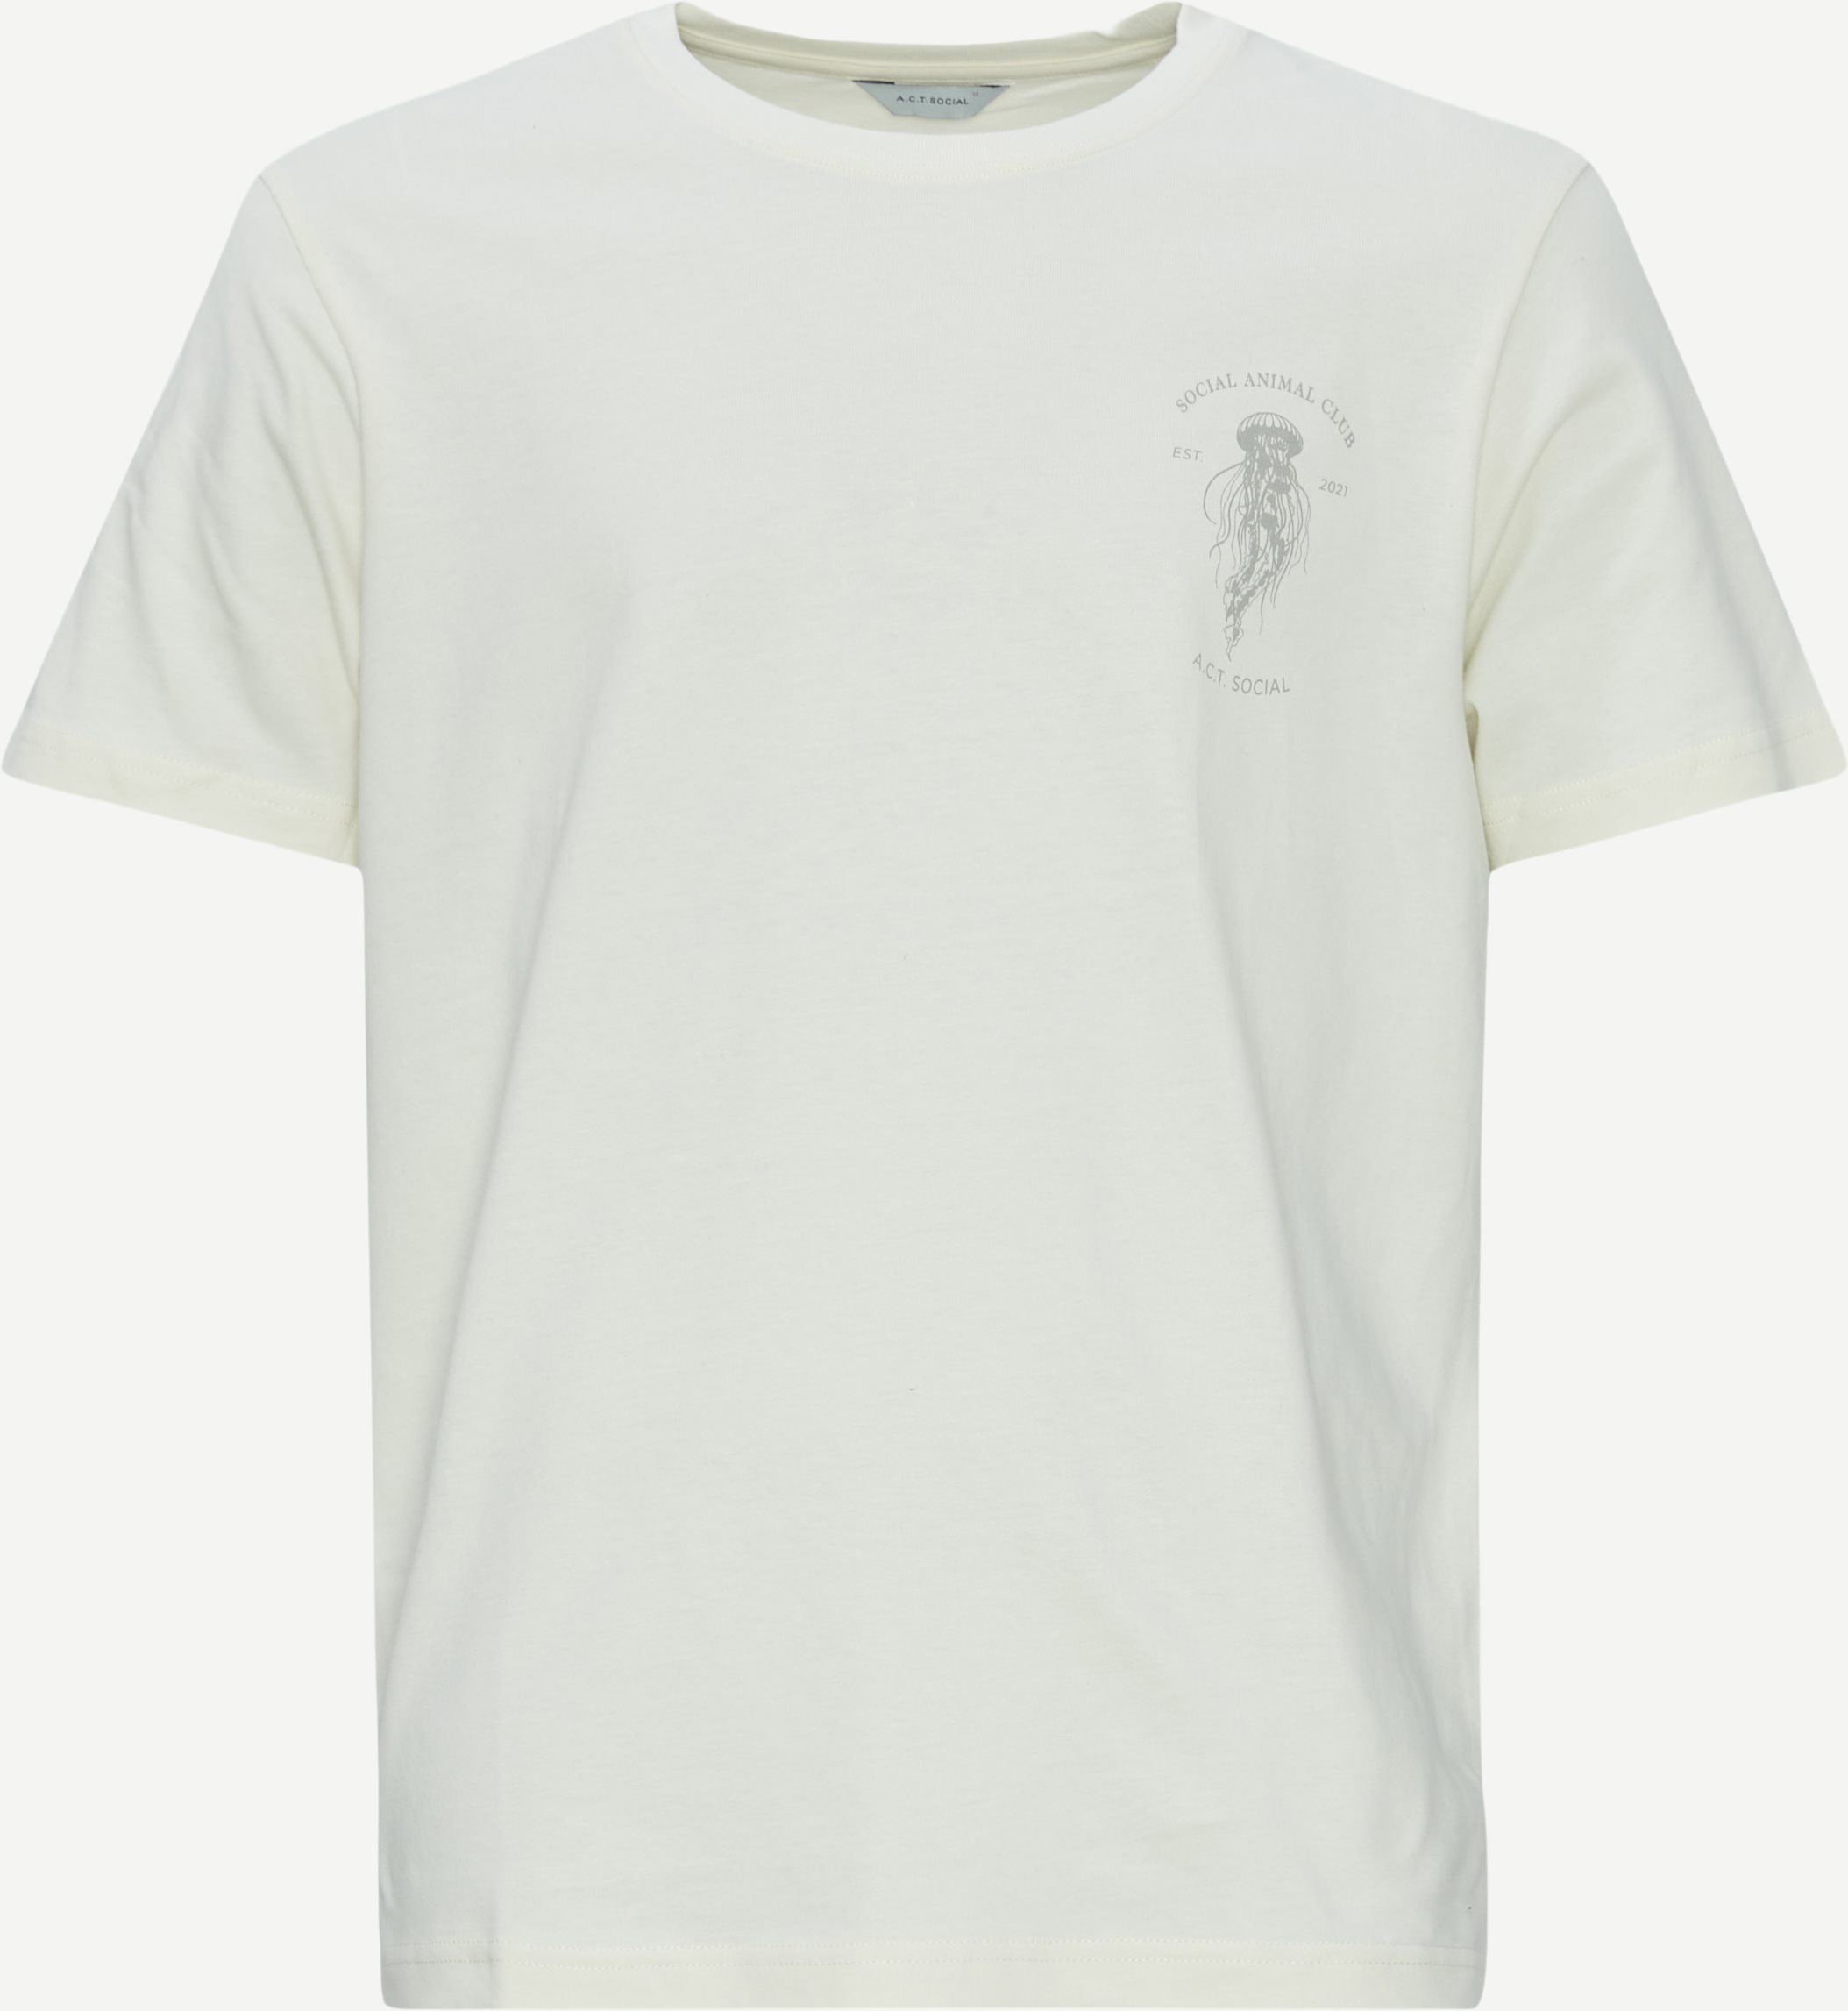 A.C.T. SOCIAL T-shirts MEDUSA AS1039 White